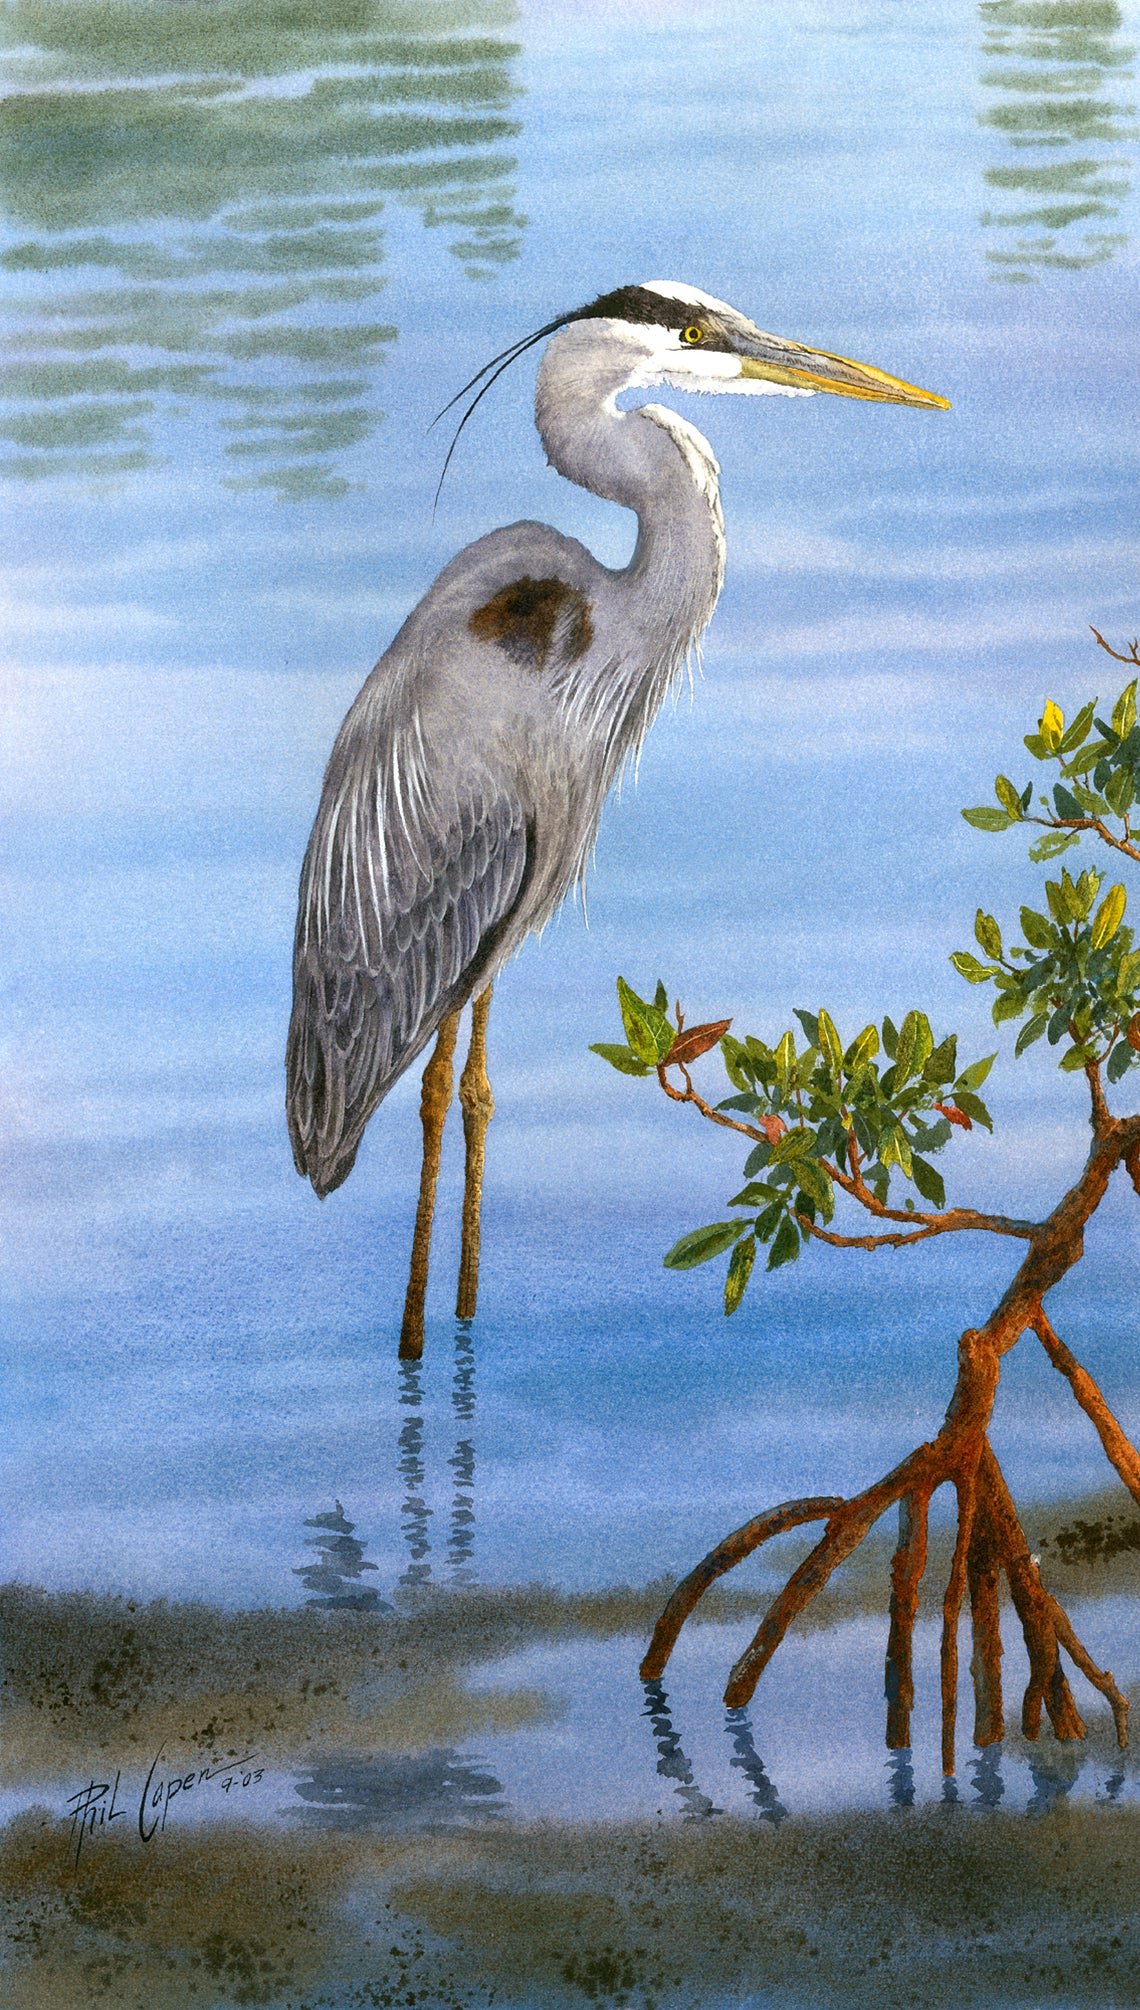 Great Blue Heron in the Mangroves